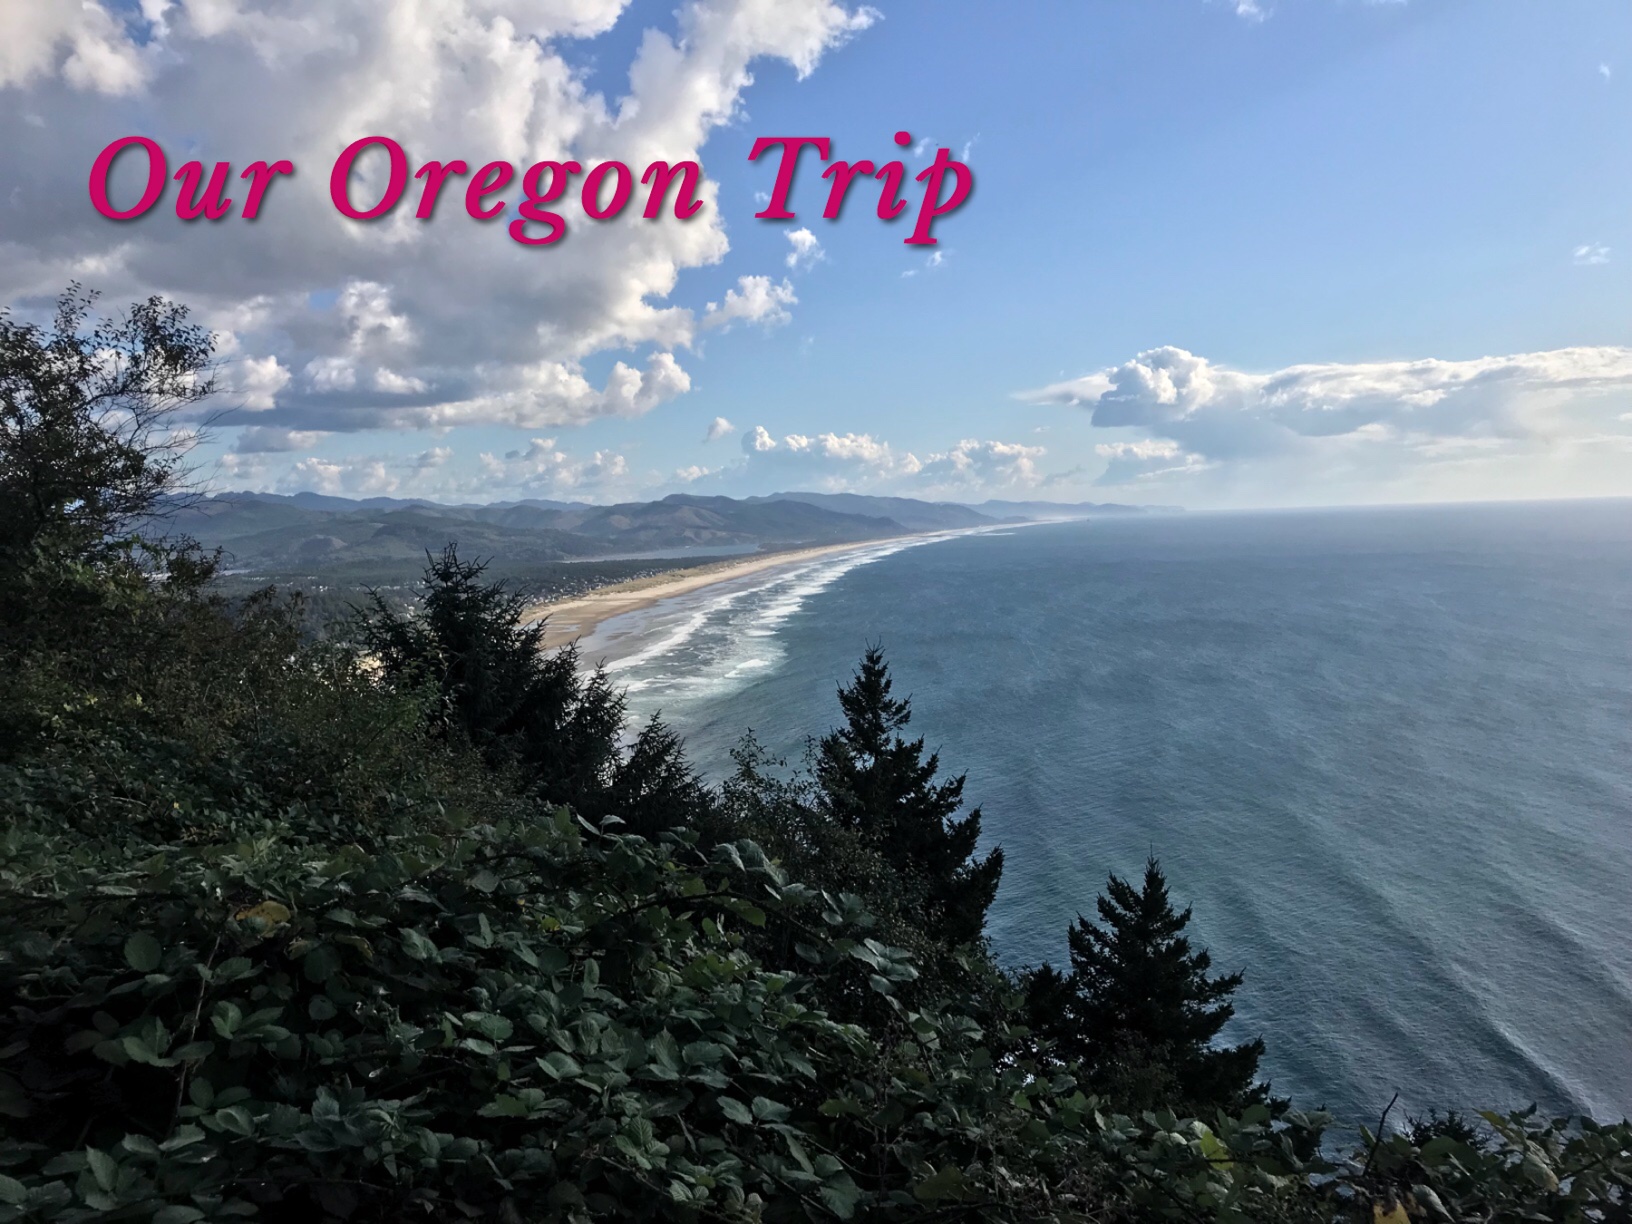 Our Oregon Trip